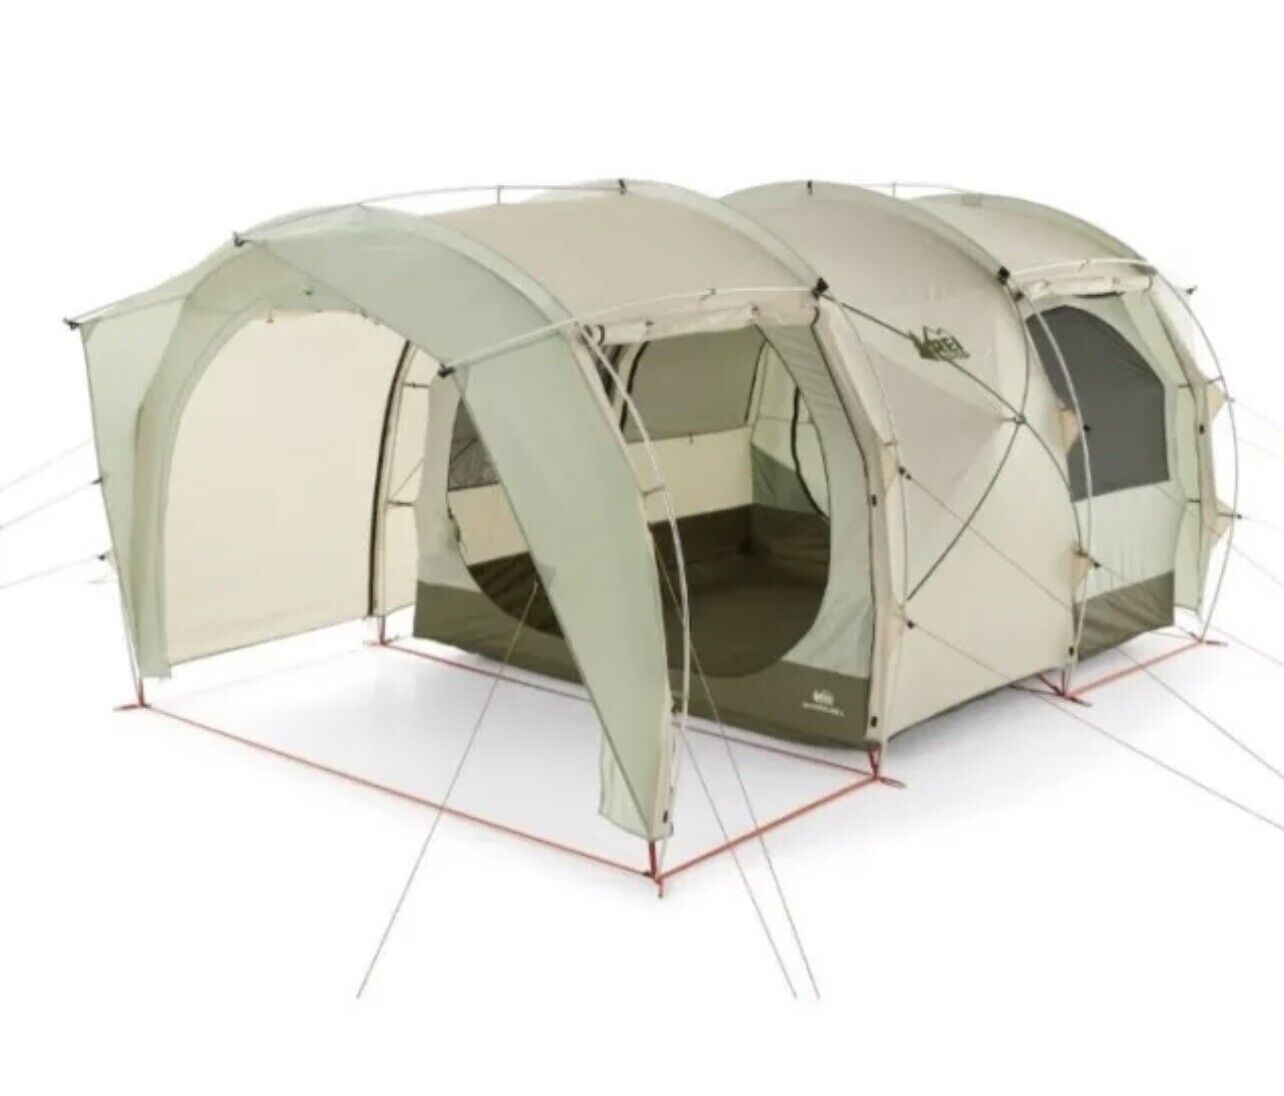 REI Co-op Wonderland X Tent W/ Tent Area Footprint - NEW